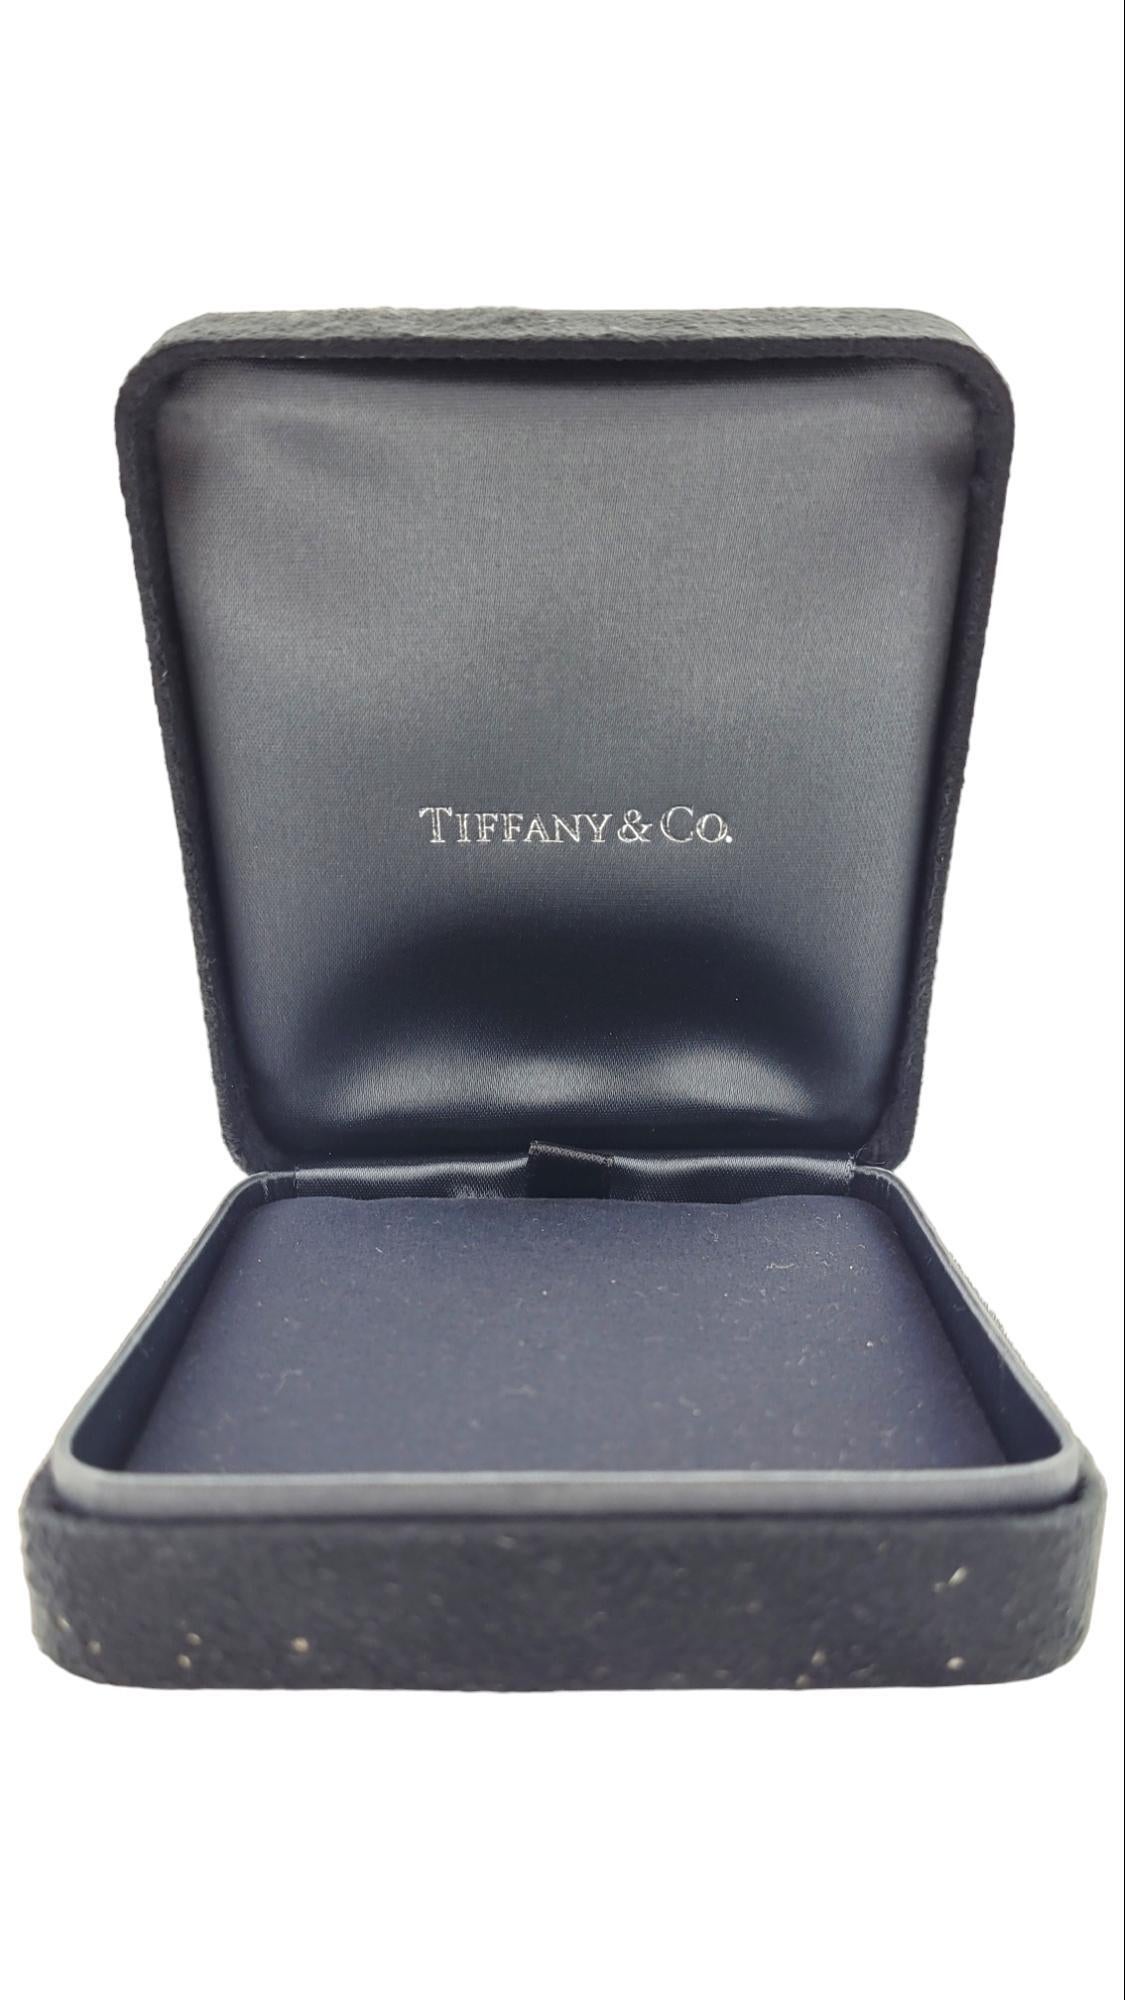 Tiffany & Co. Platinum Diamond Solitaire Pendant Necklace #15833 1